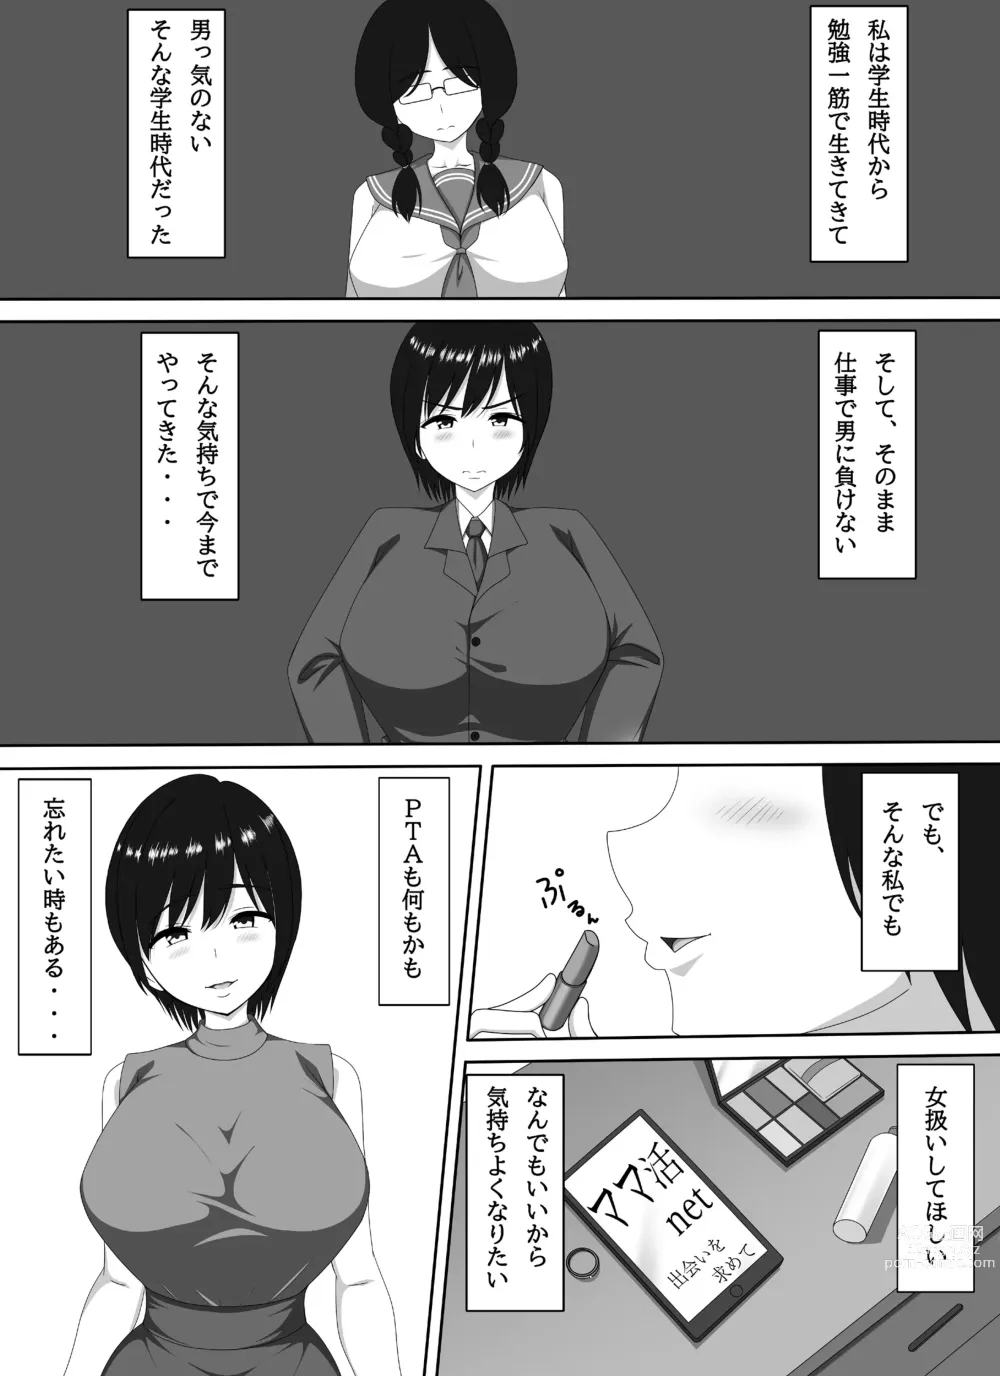 Page 6 of doujinshi Mamakatsu PTA Kaichou